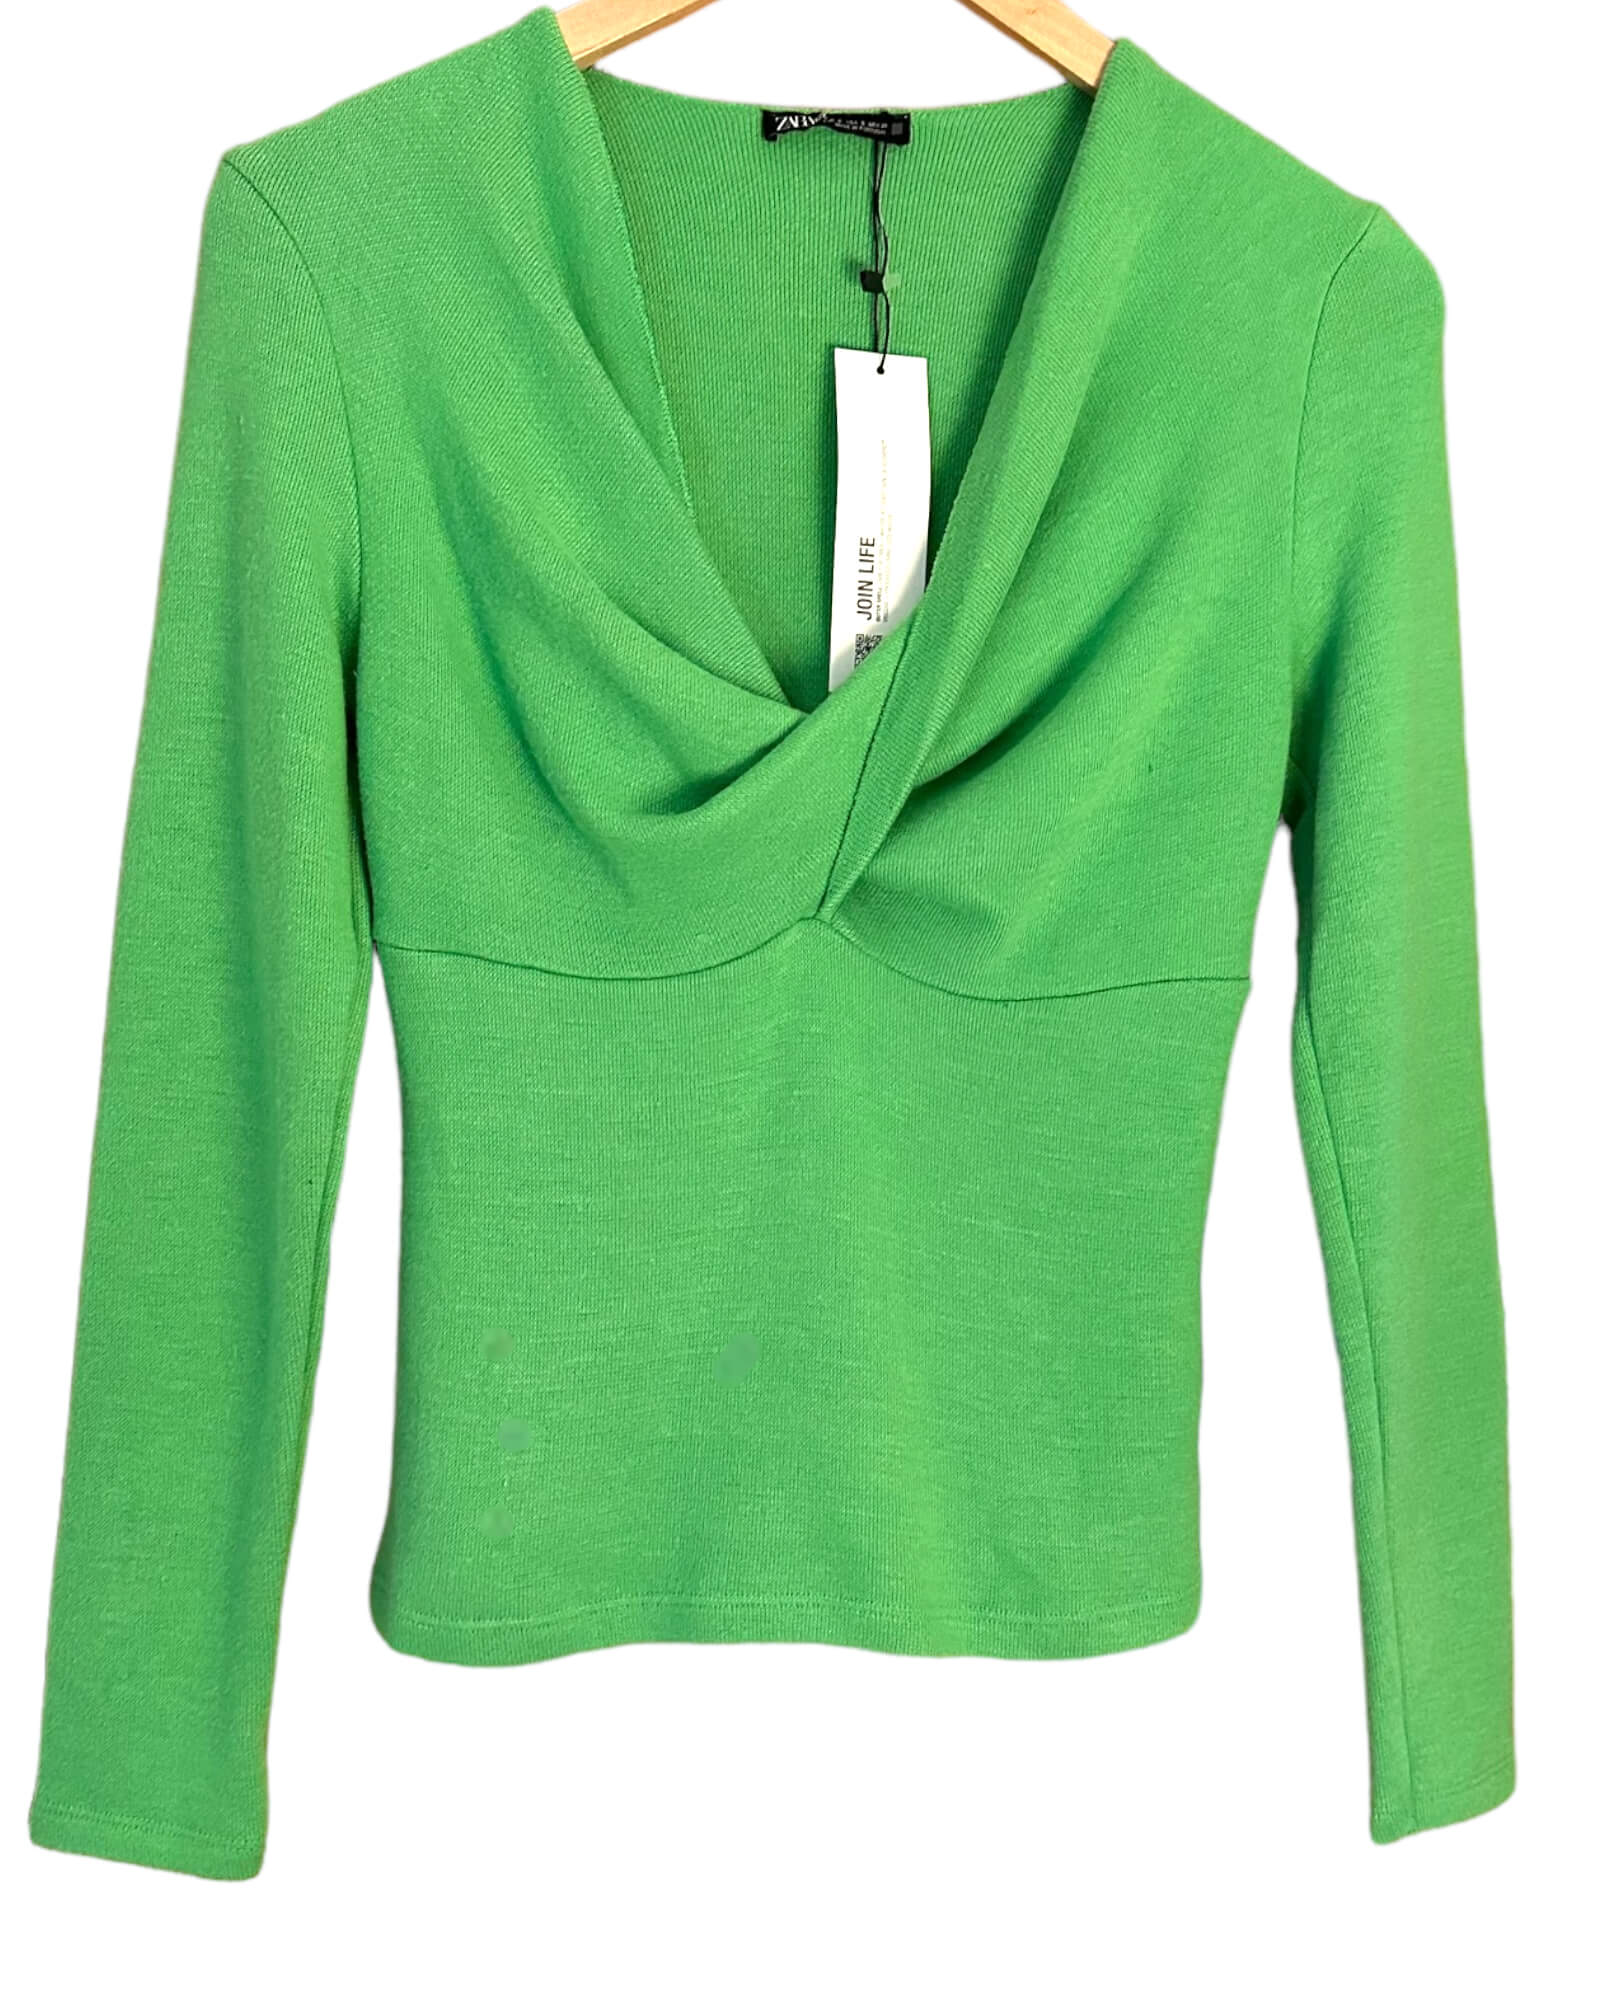 Bright Spring apple green ZARA twist front knit top